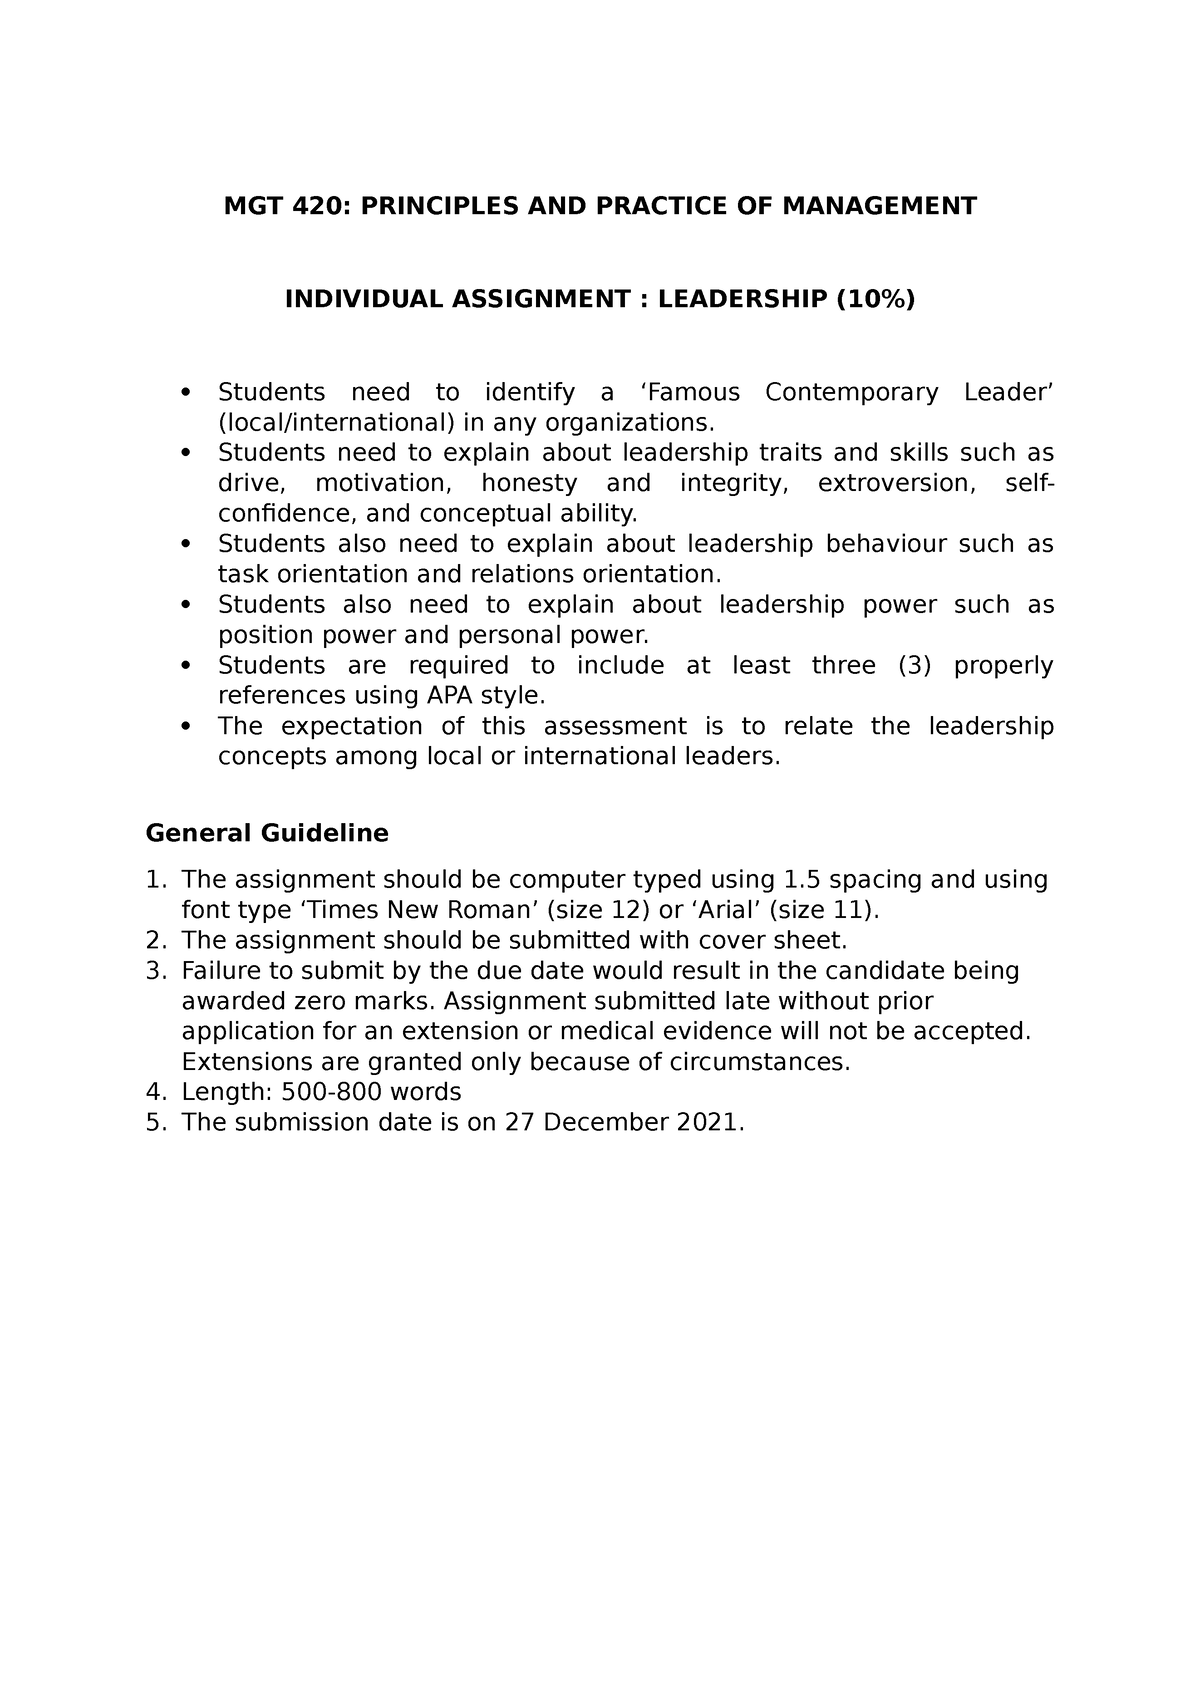 mgt 420 individual assignment leadership